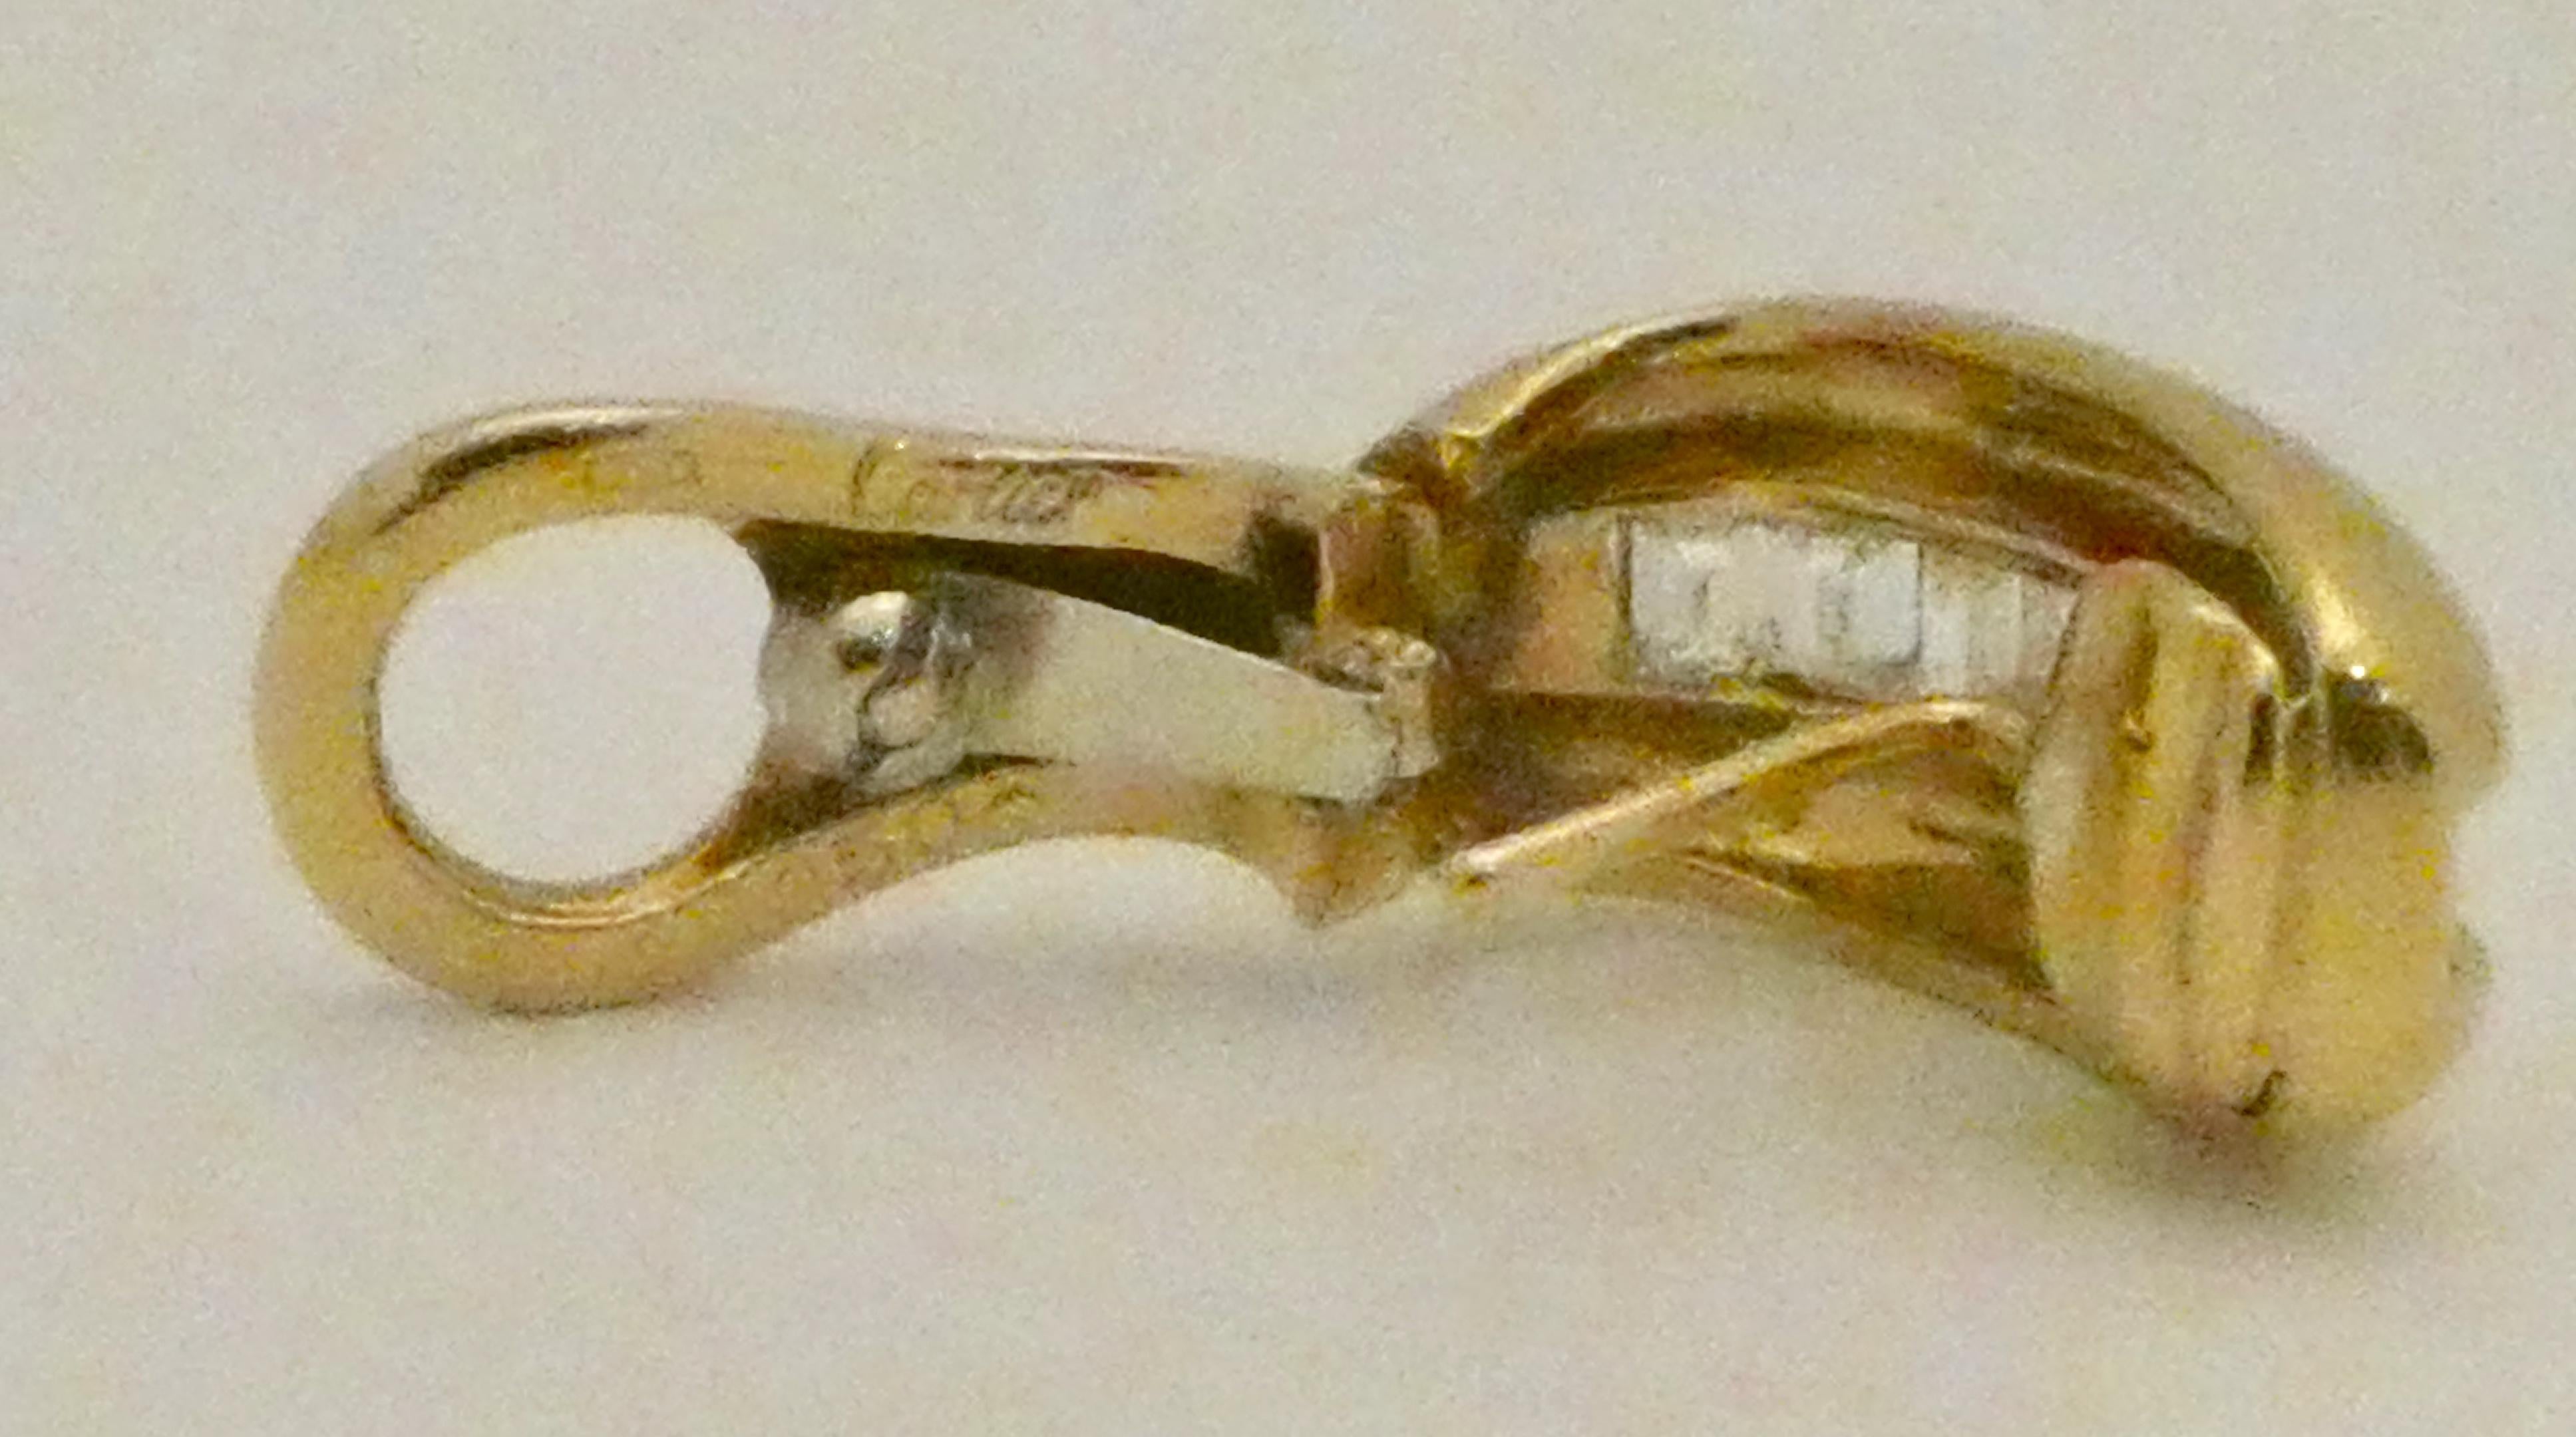 18 Karat Yellow Gold Cartier Diamond Earrings, from the 